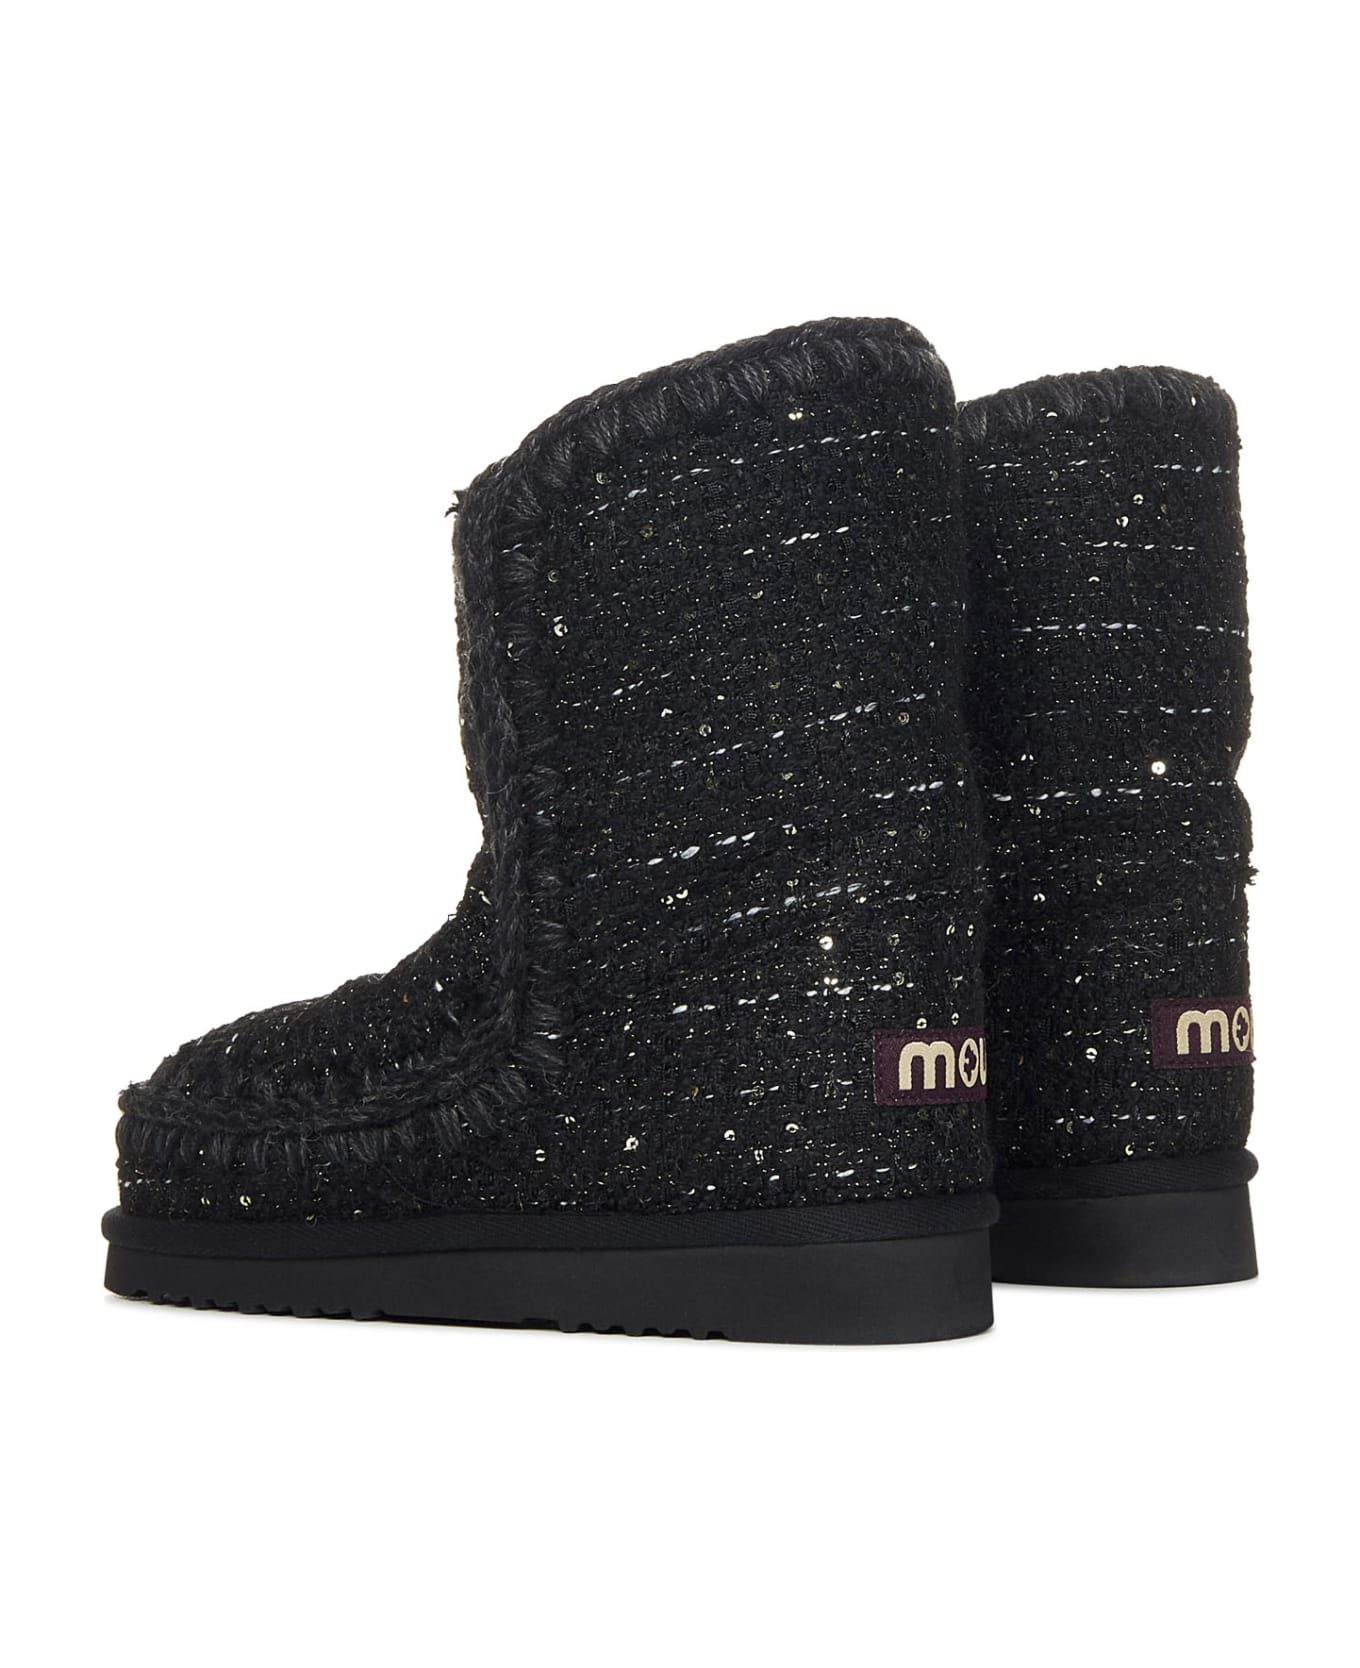 Mou Eskimo 24 Textile -tweed Boots - Black ブーツ